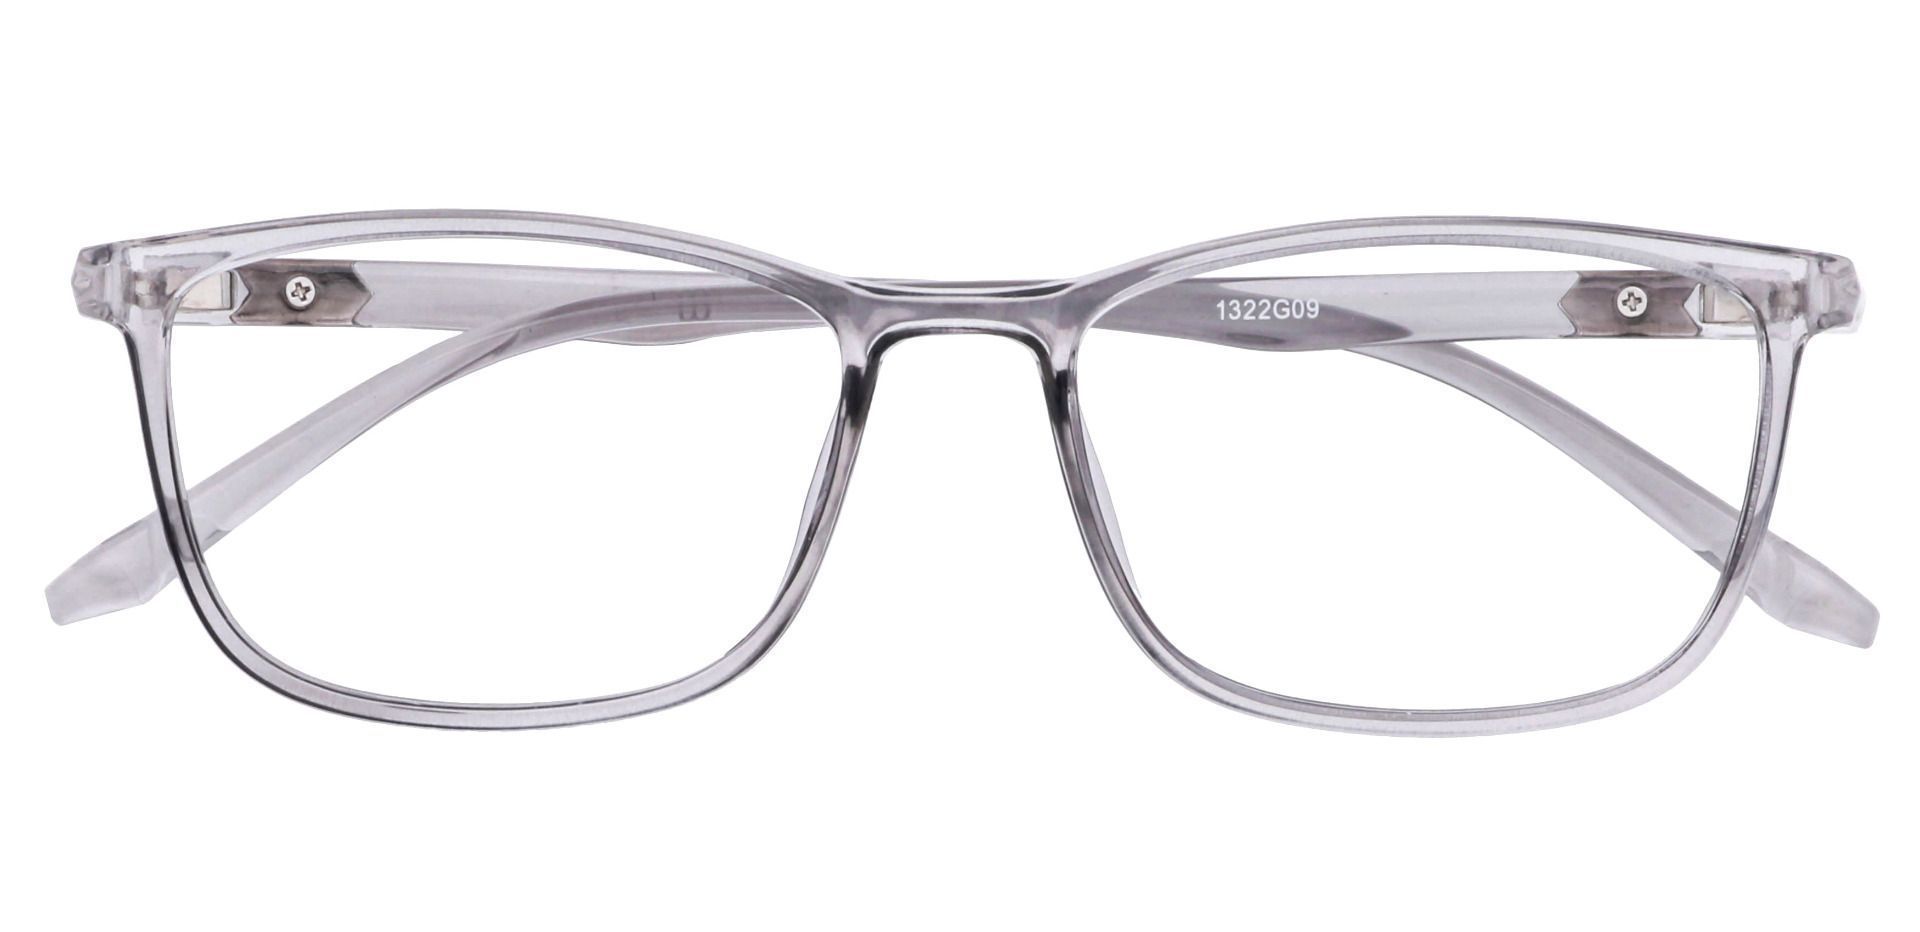 Harvest Rectangle Progressive Glasses - Gray